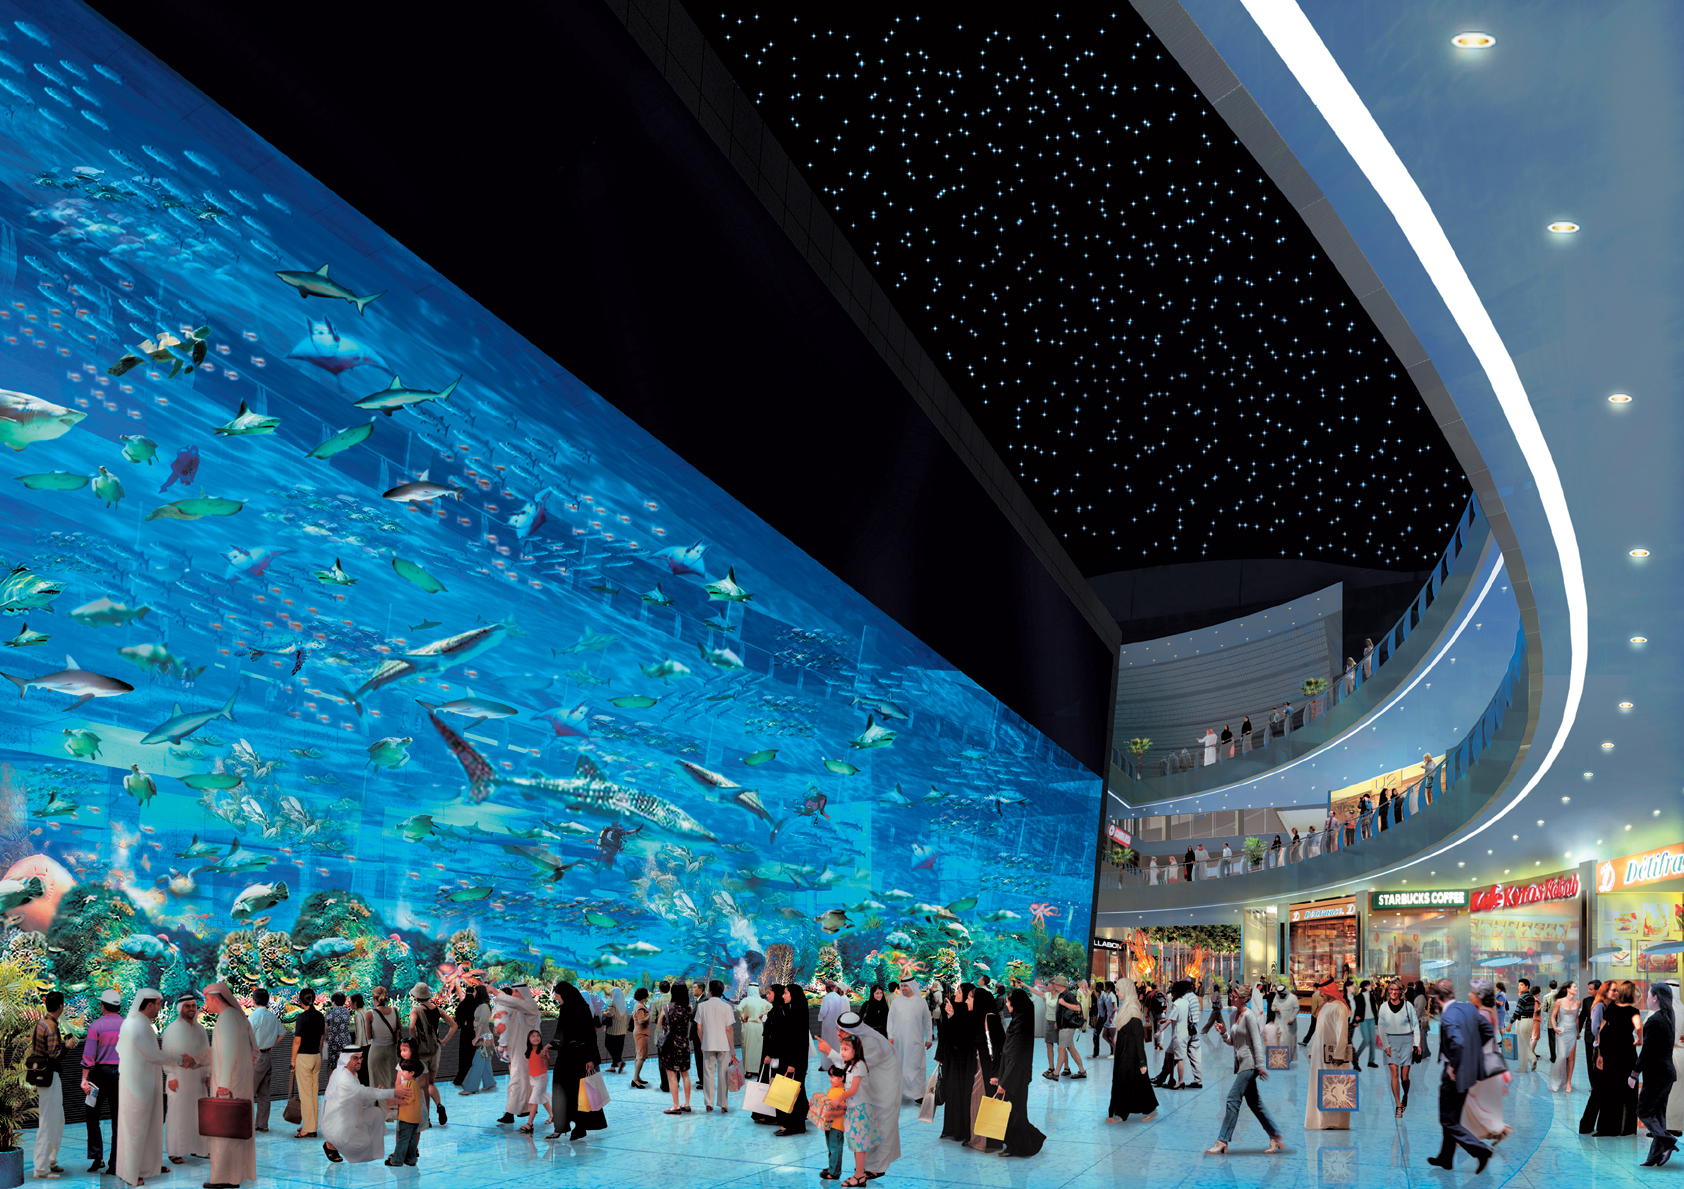 http://www.flashydubai.com/images/Dubai_Mall_Aquarium.jpg